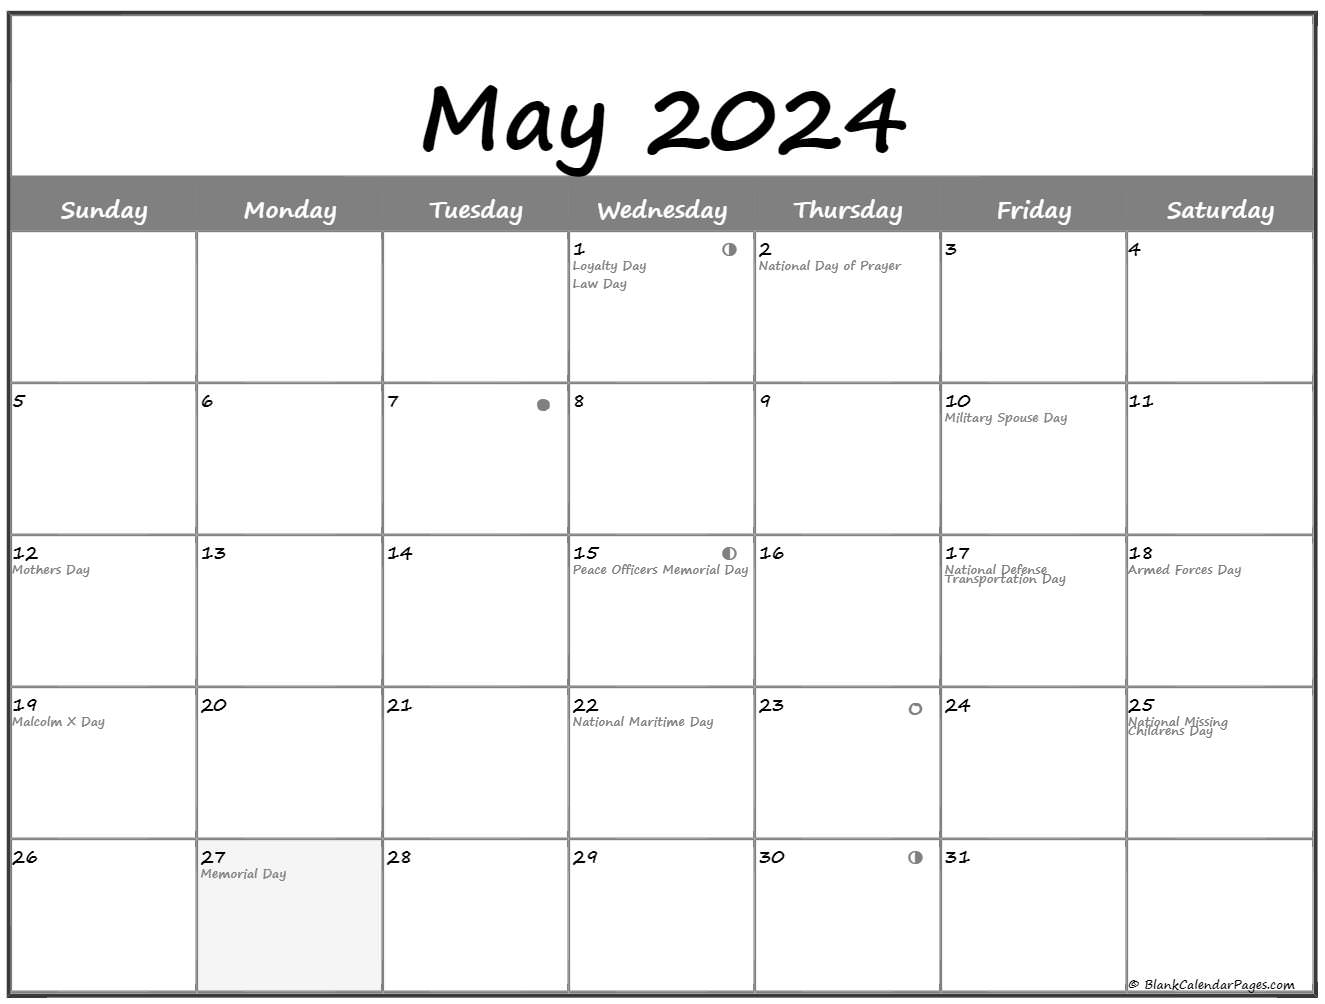 May 2024 Lunar Calendar Moon Phase Calendar